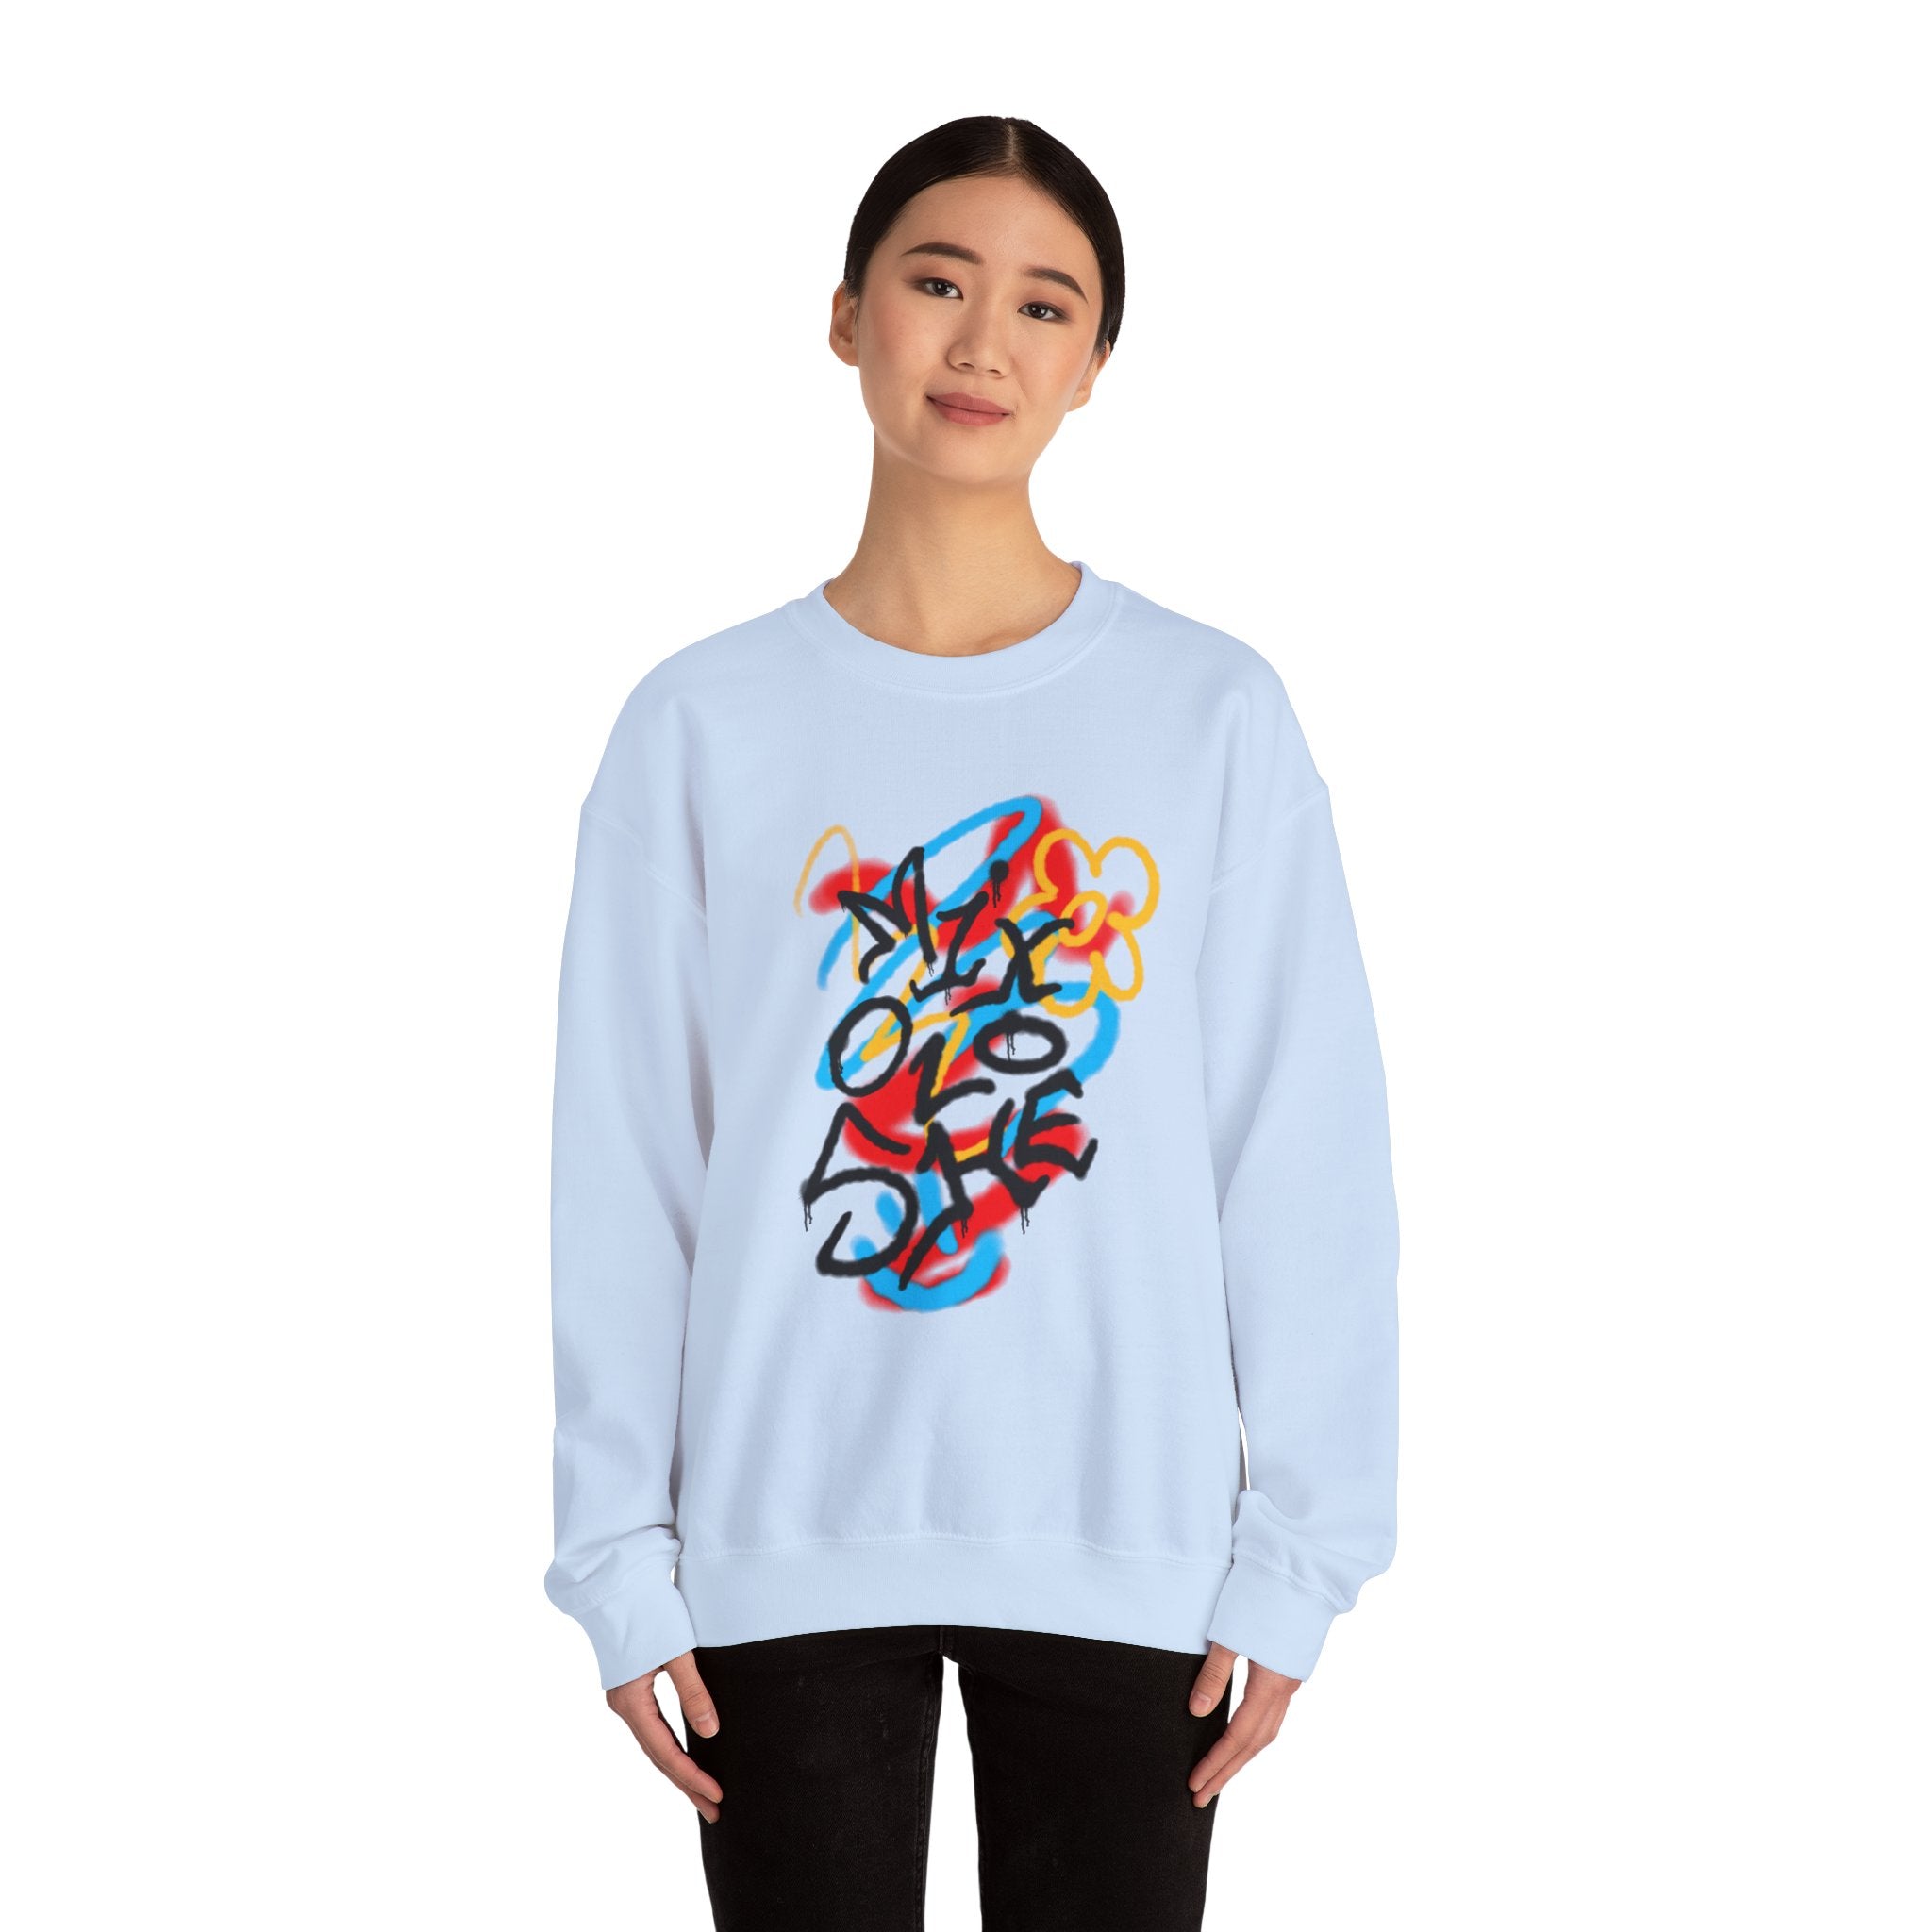 Graffiti Sweater